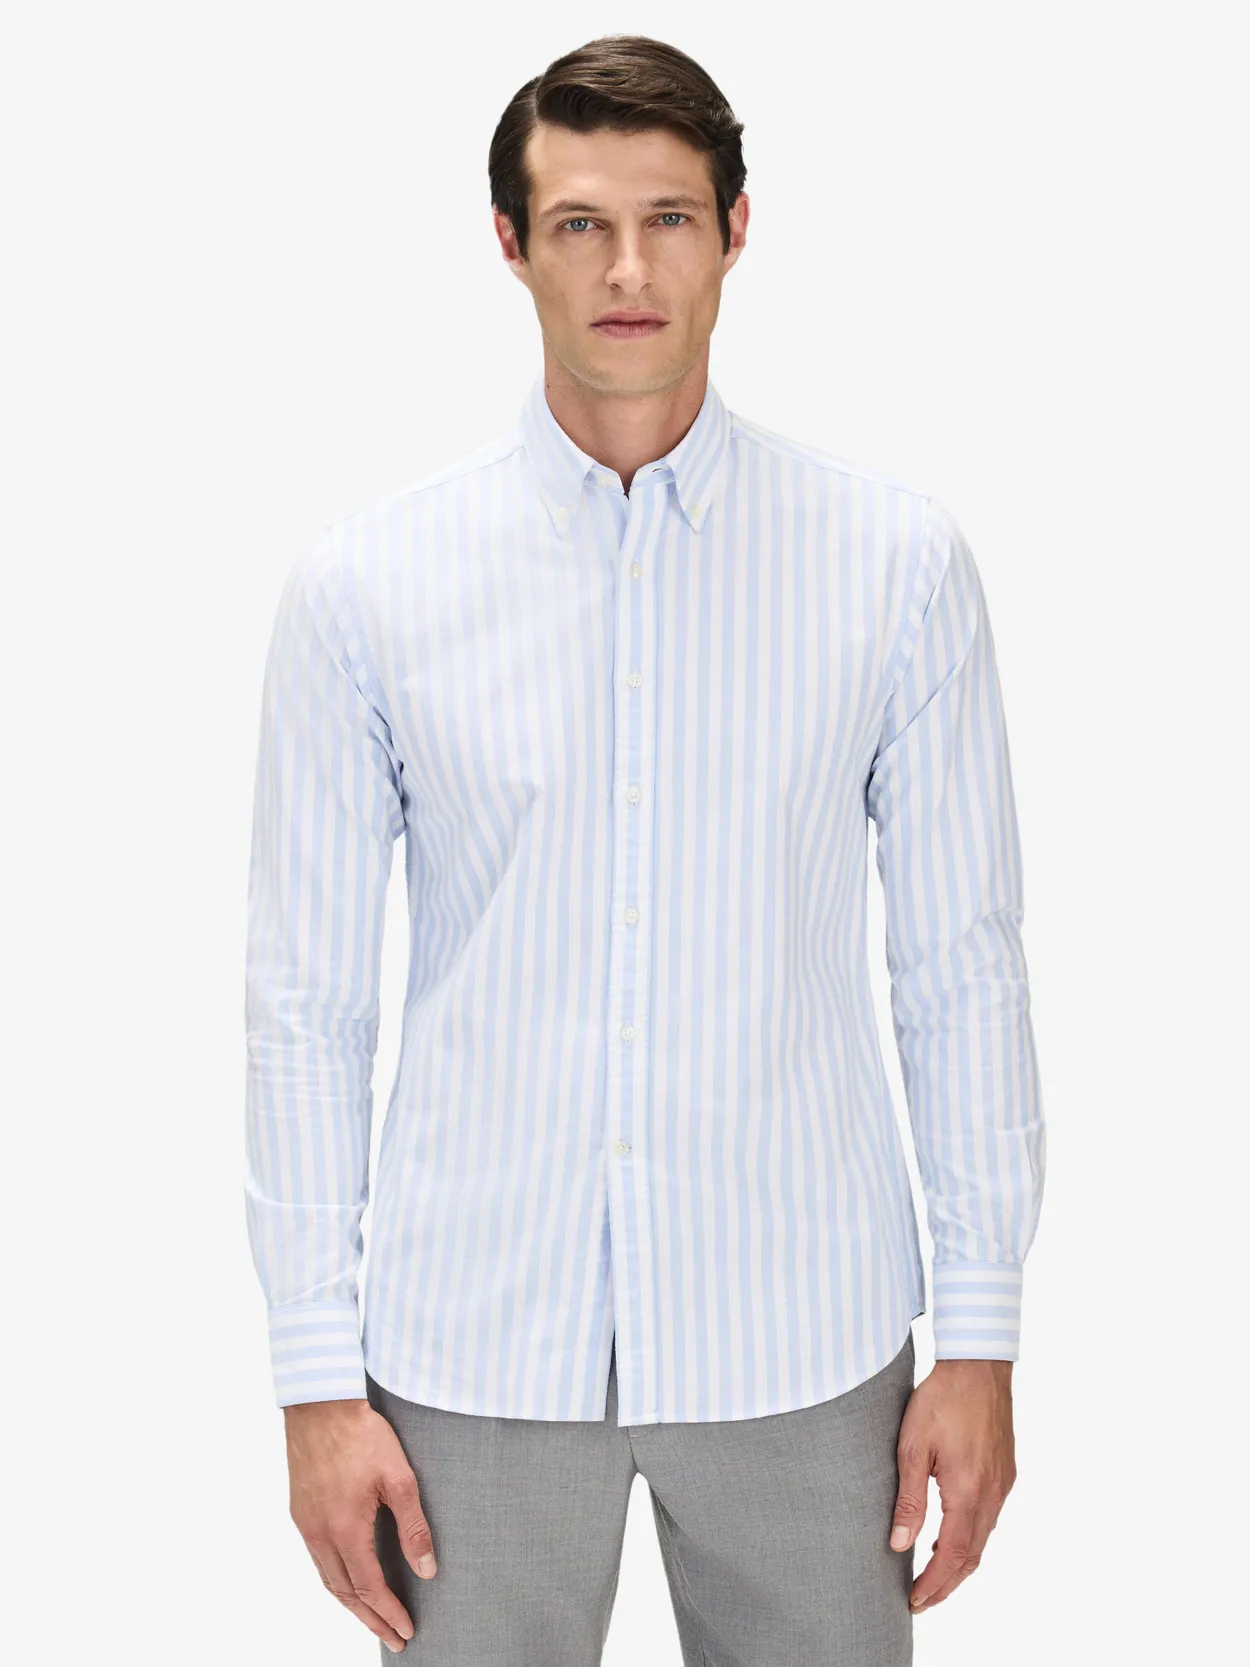 Blue & White Striped Oxford Shirt